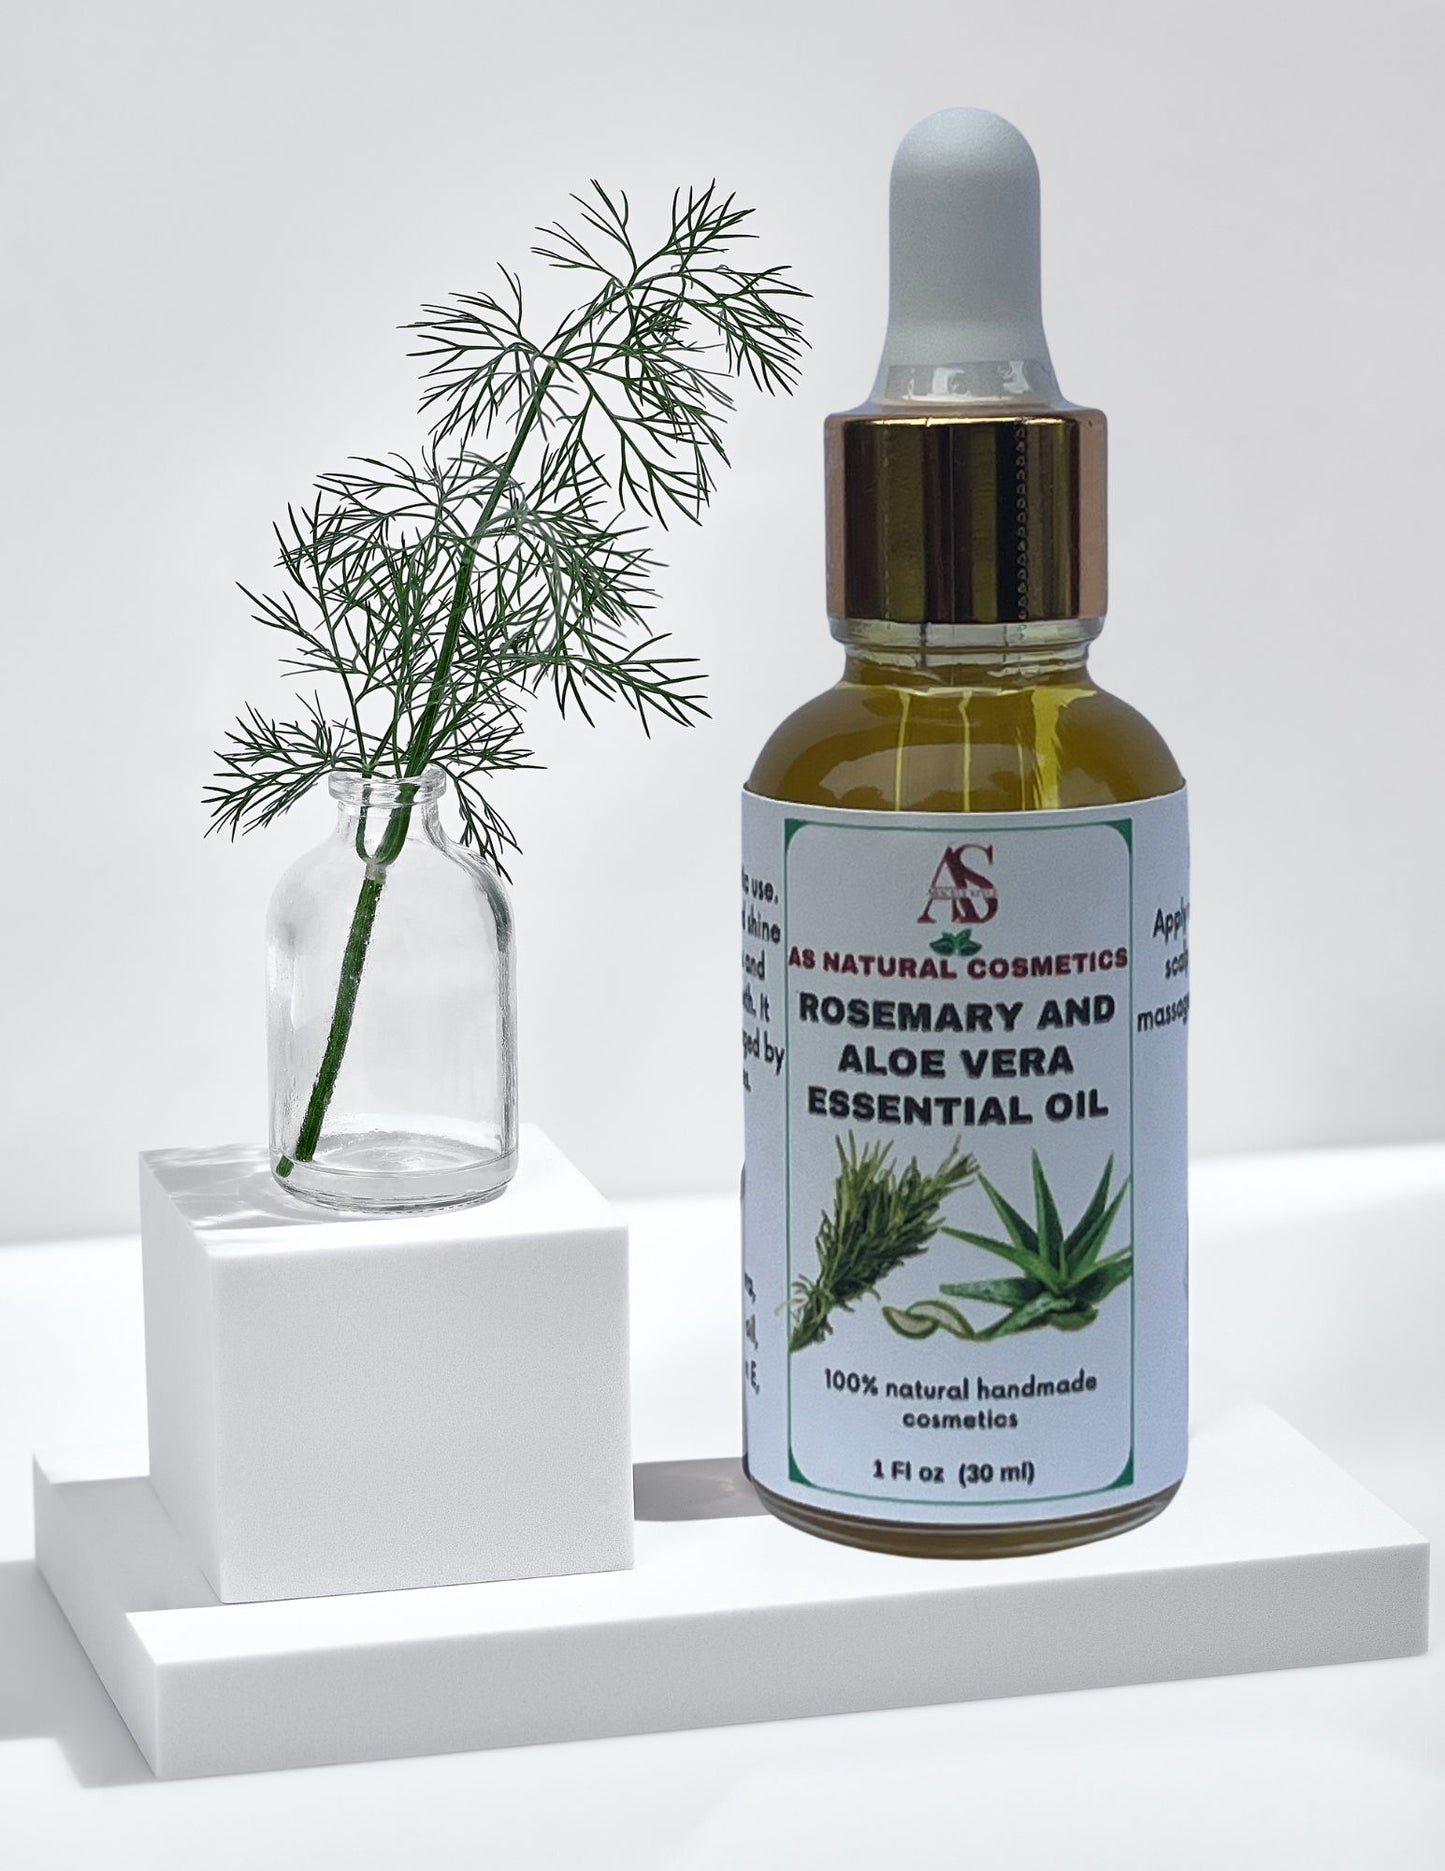 Rosemary essential oil and aloe vera